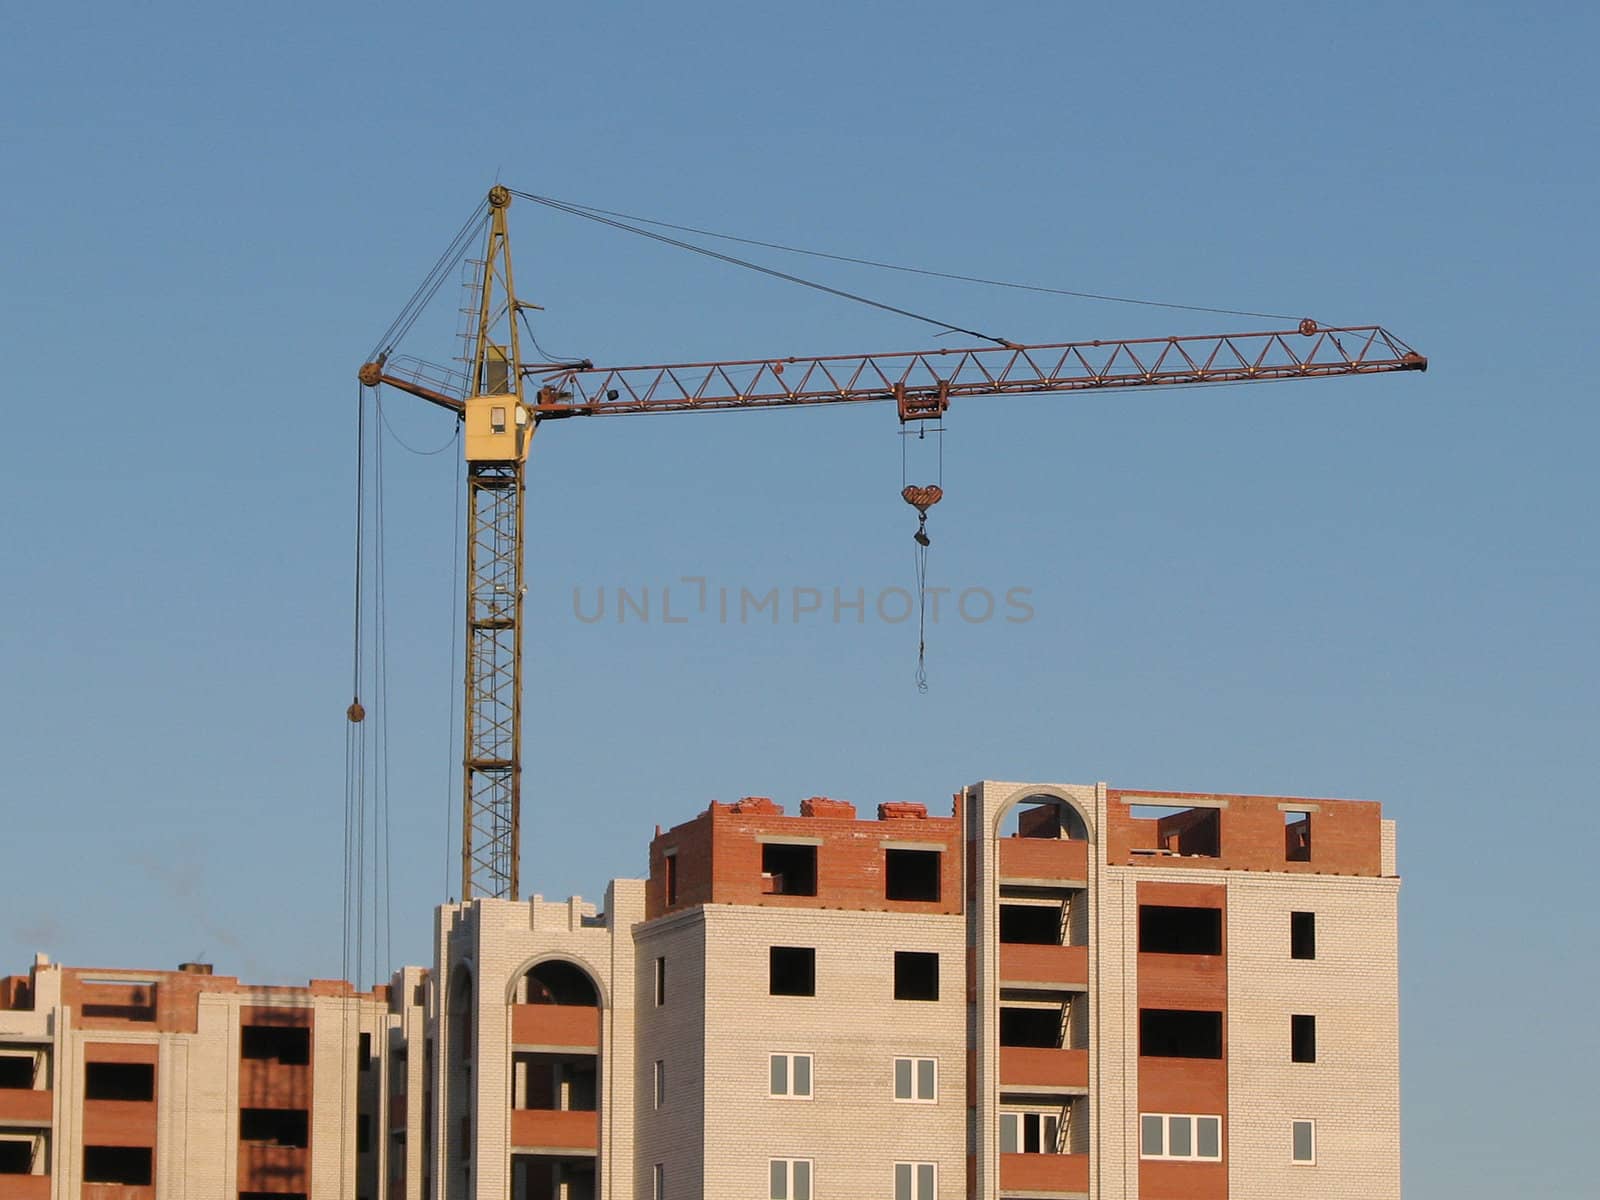 the hoisting crane on the blue sky background